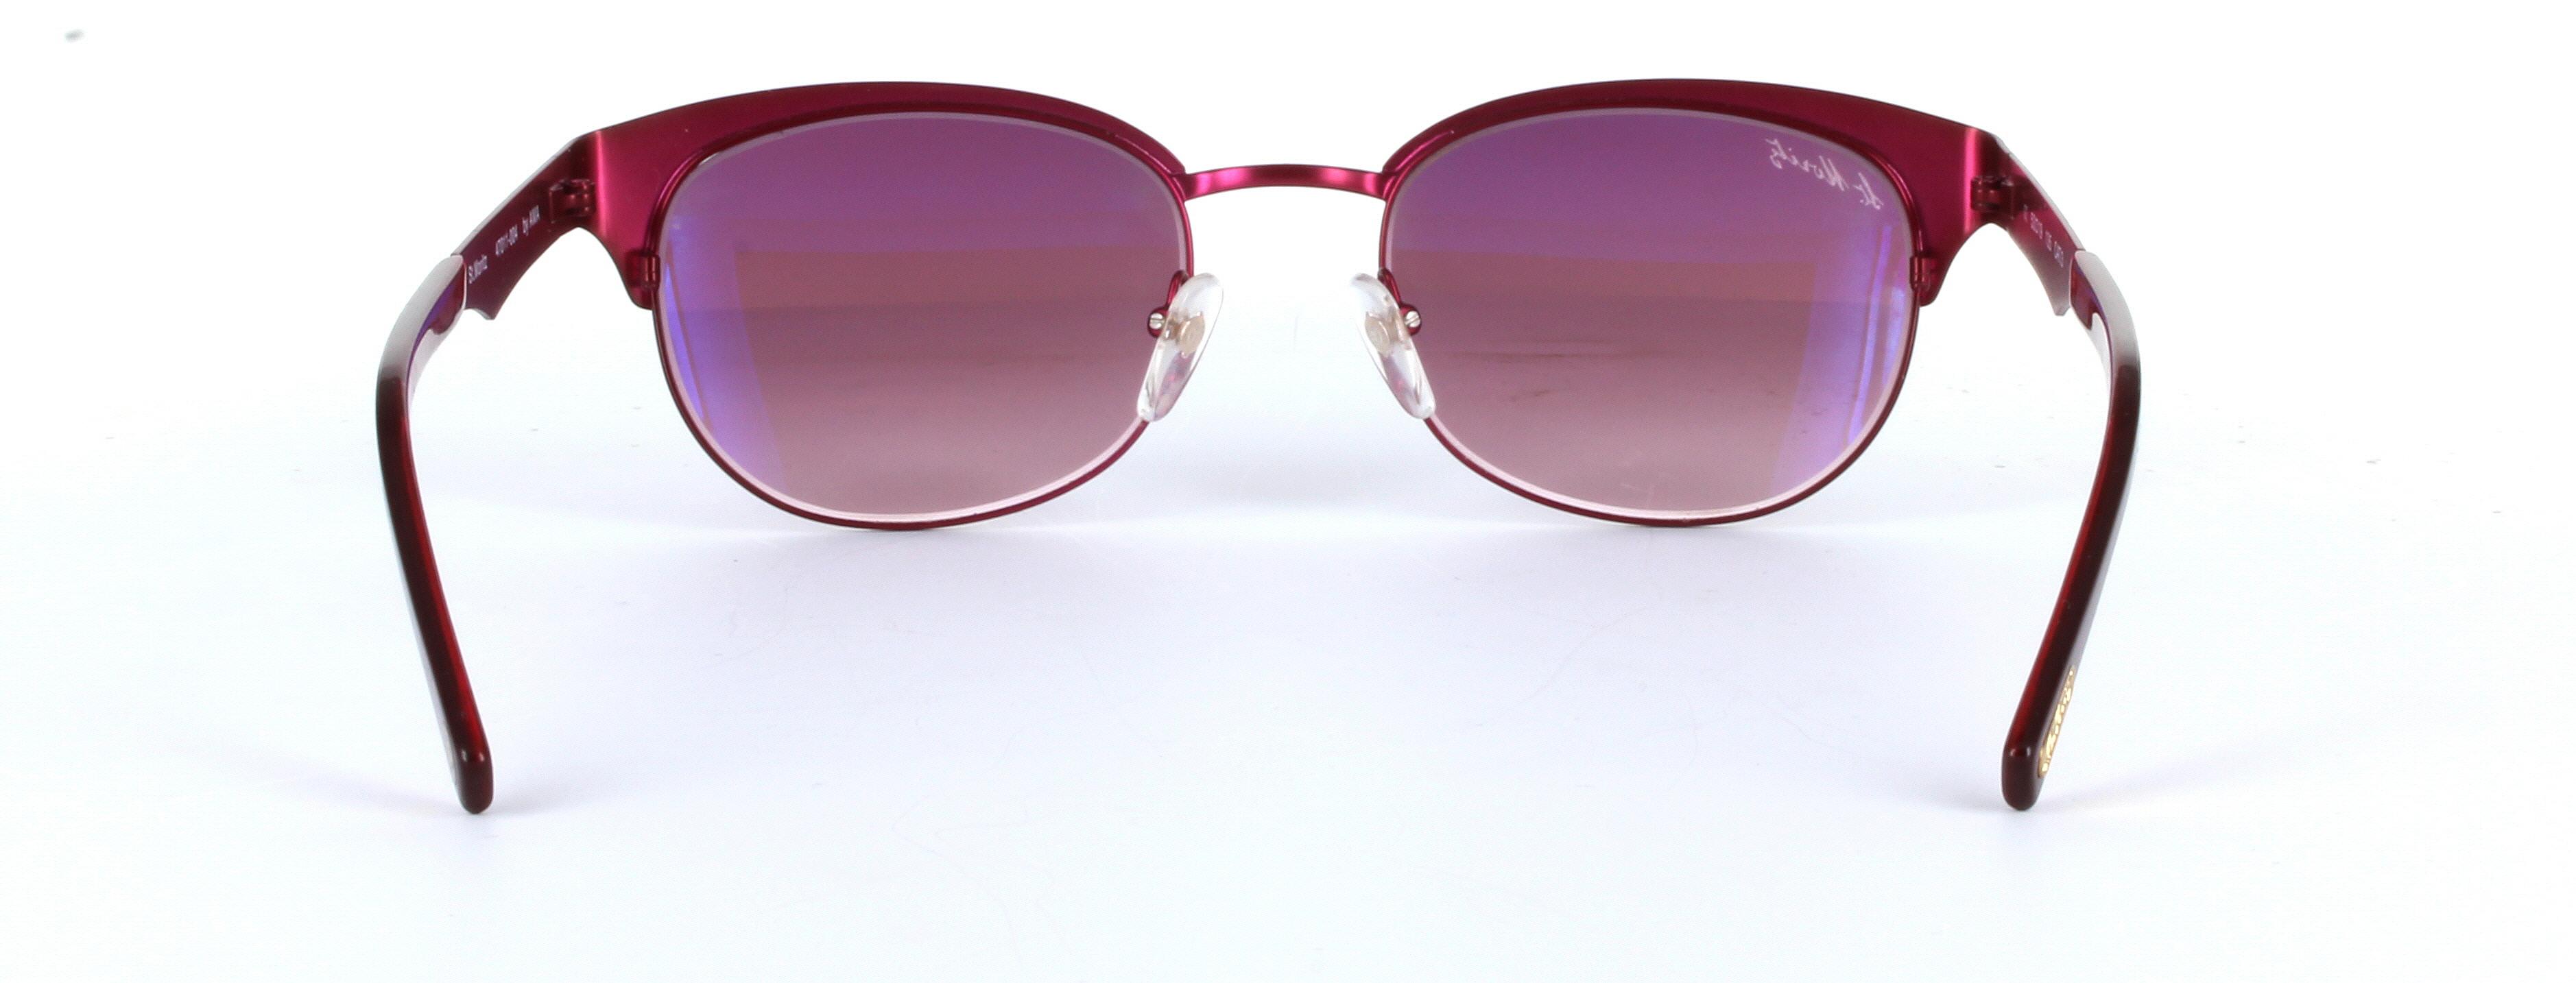 St Moritz Ladies sunglasses image 3